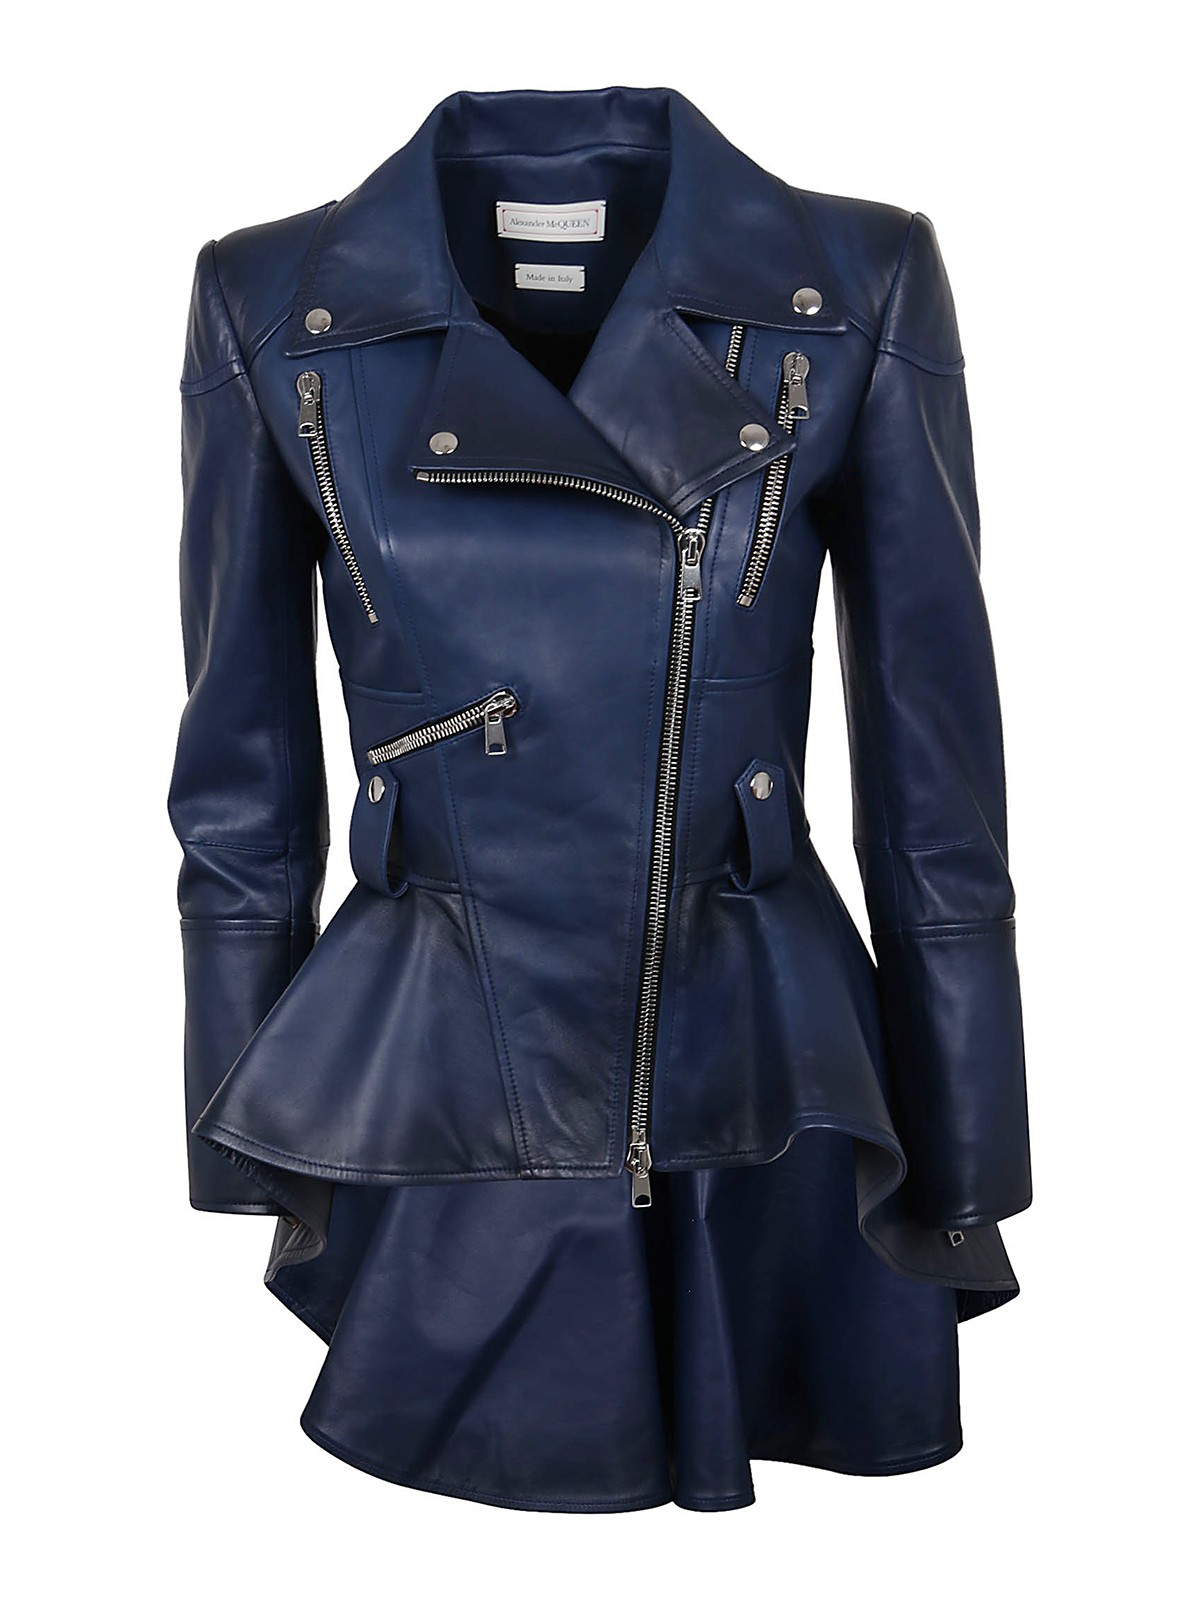 Leather jacket Alexander Mcqueen - Leather peplum jacket - 629379Q5AJ04149